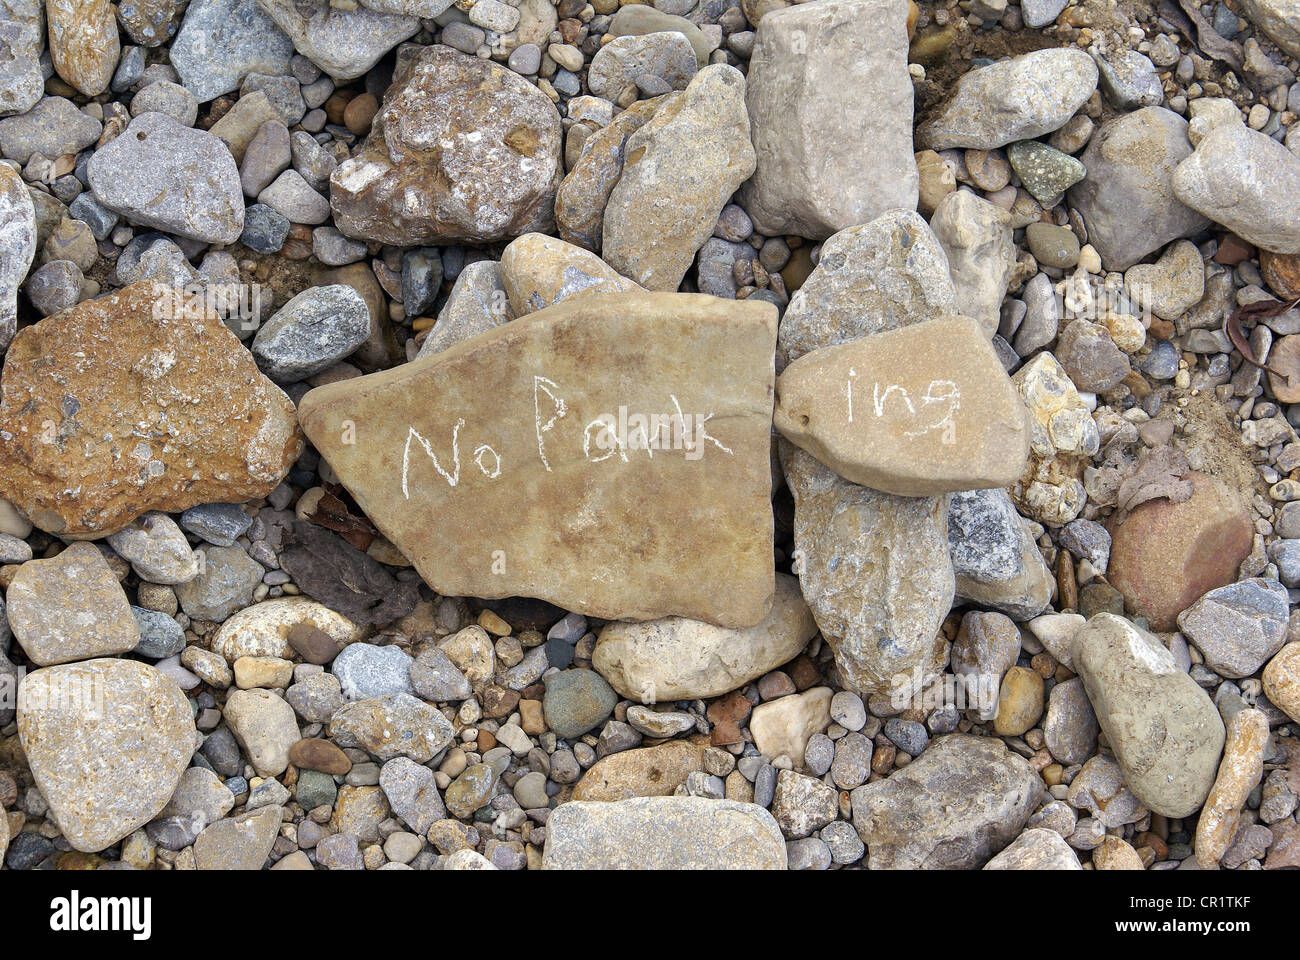 No Parking written on two rocks. Stock Photo